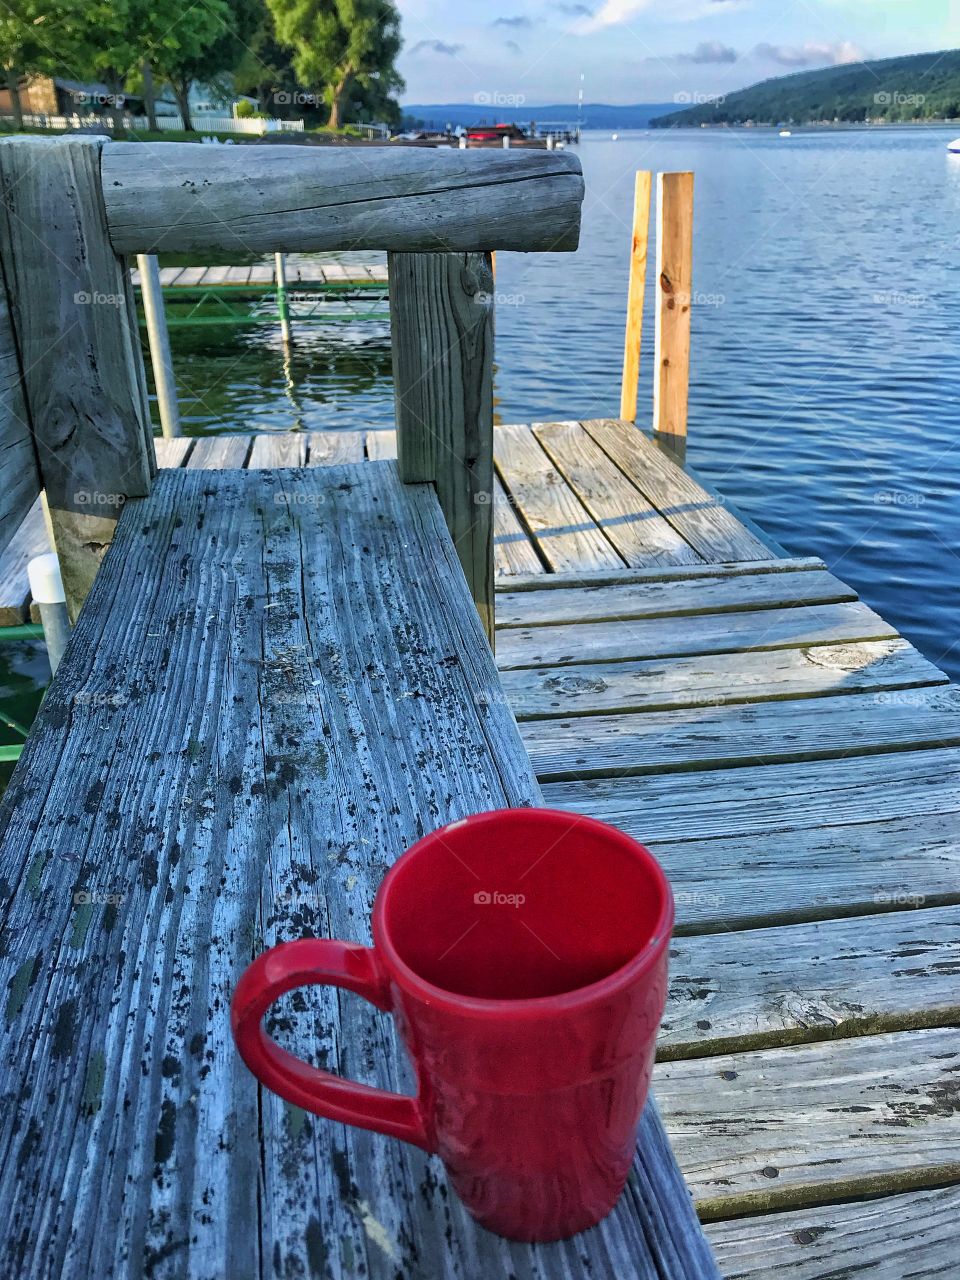 Morning coffee on the lake